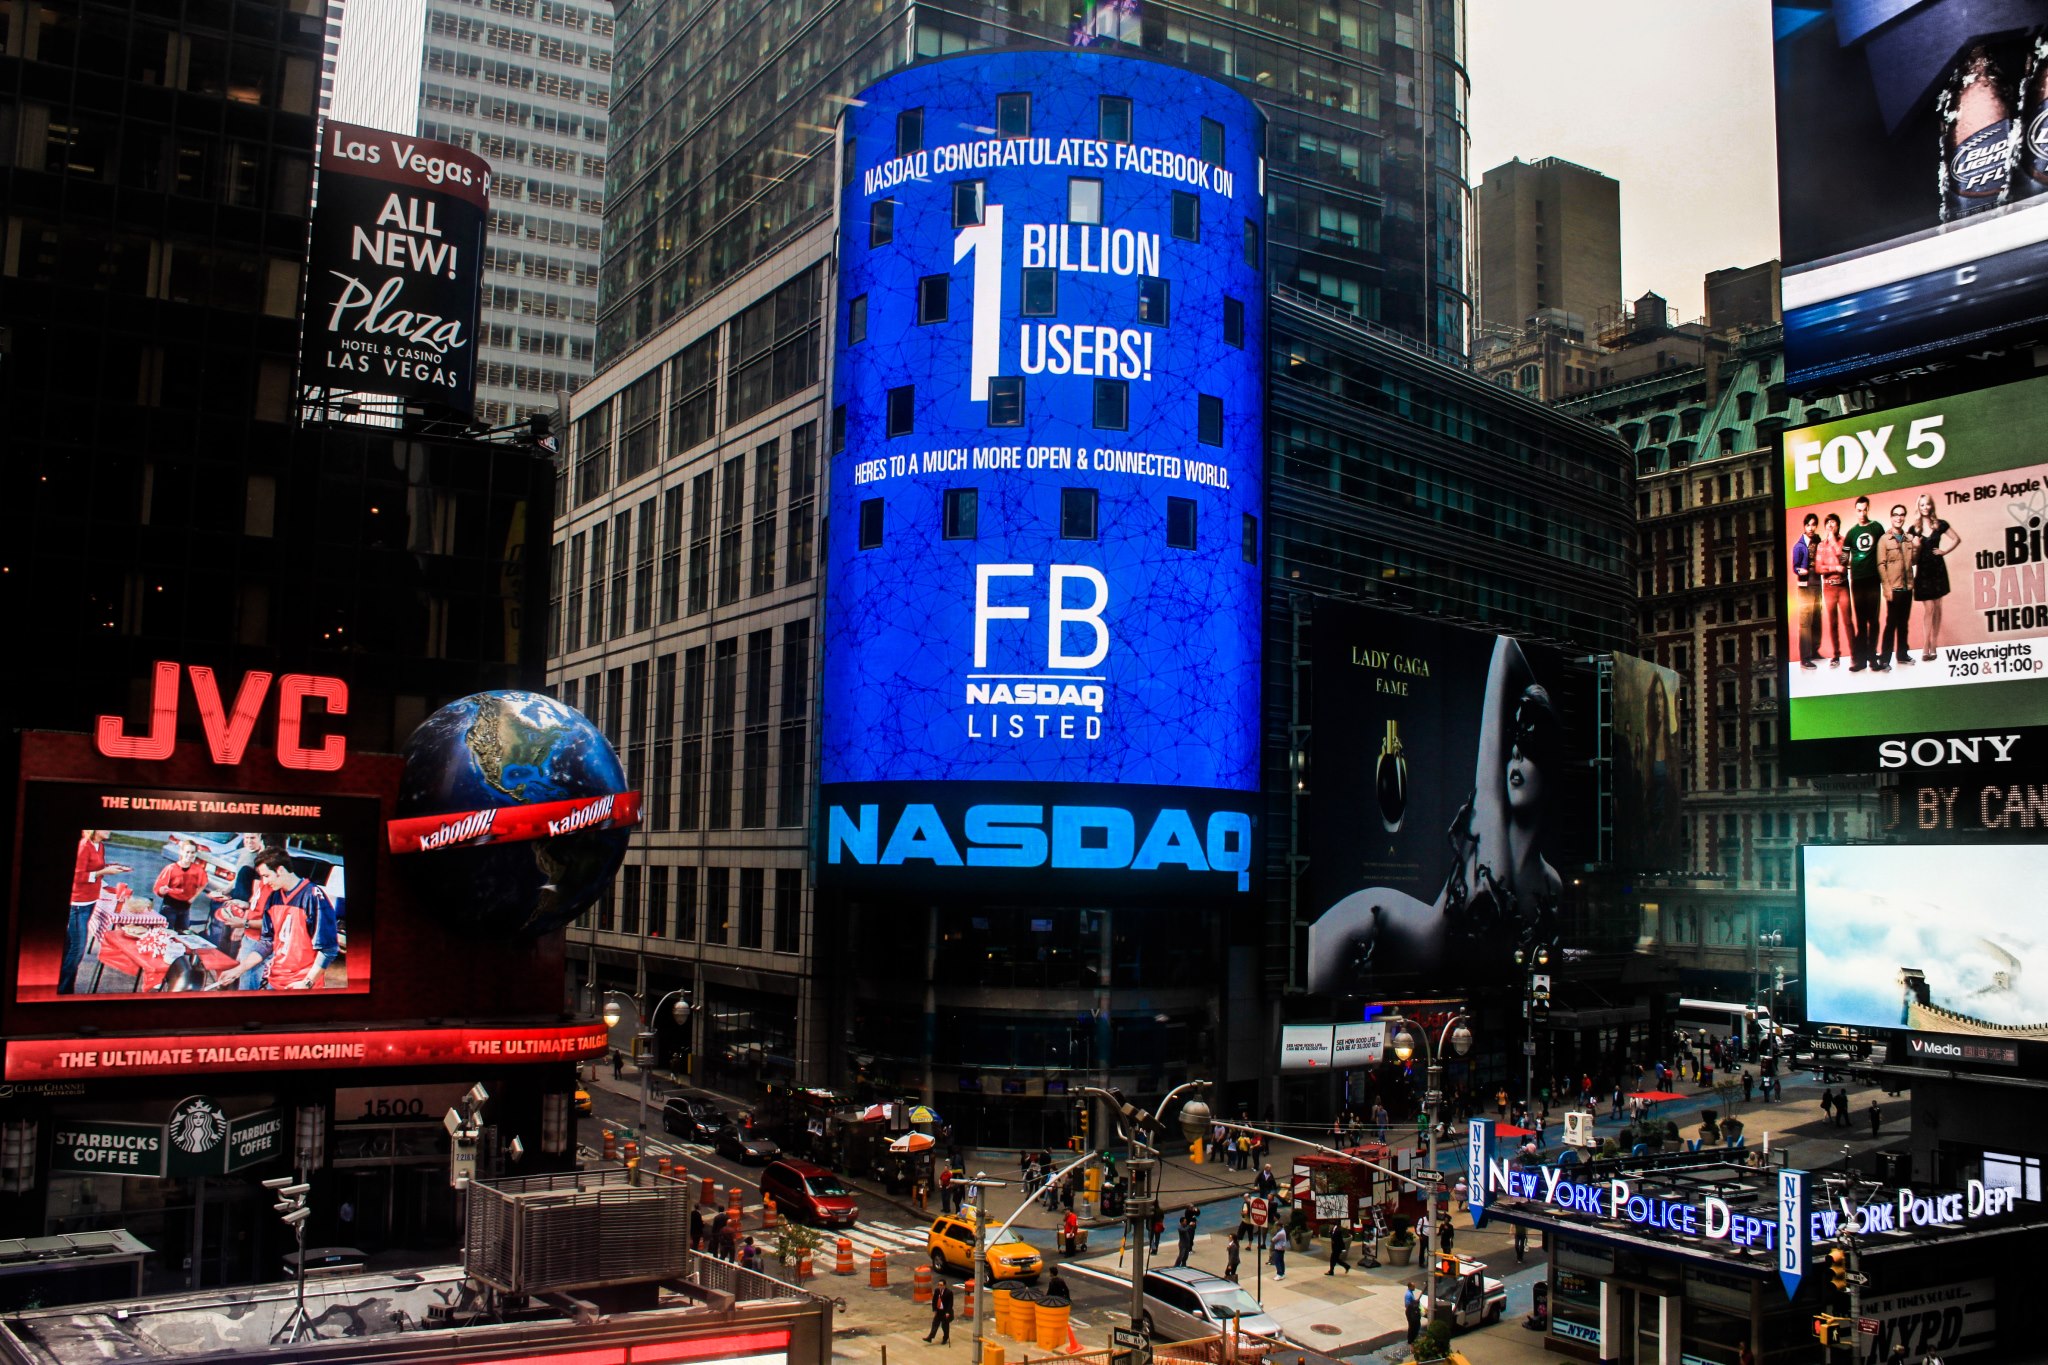 Facebook hits 1 billion users